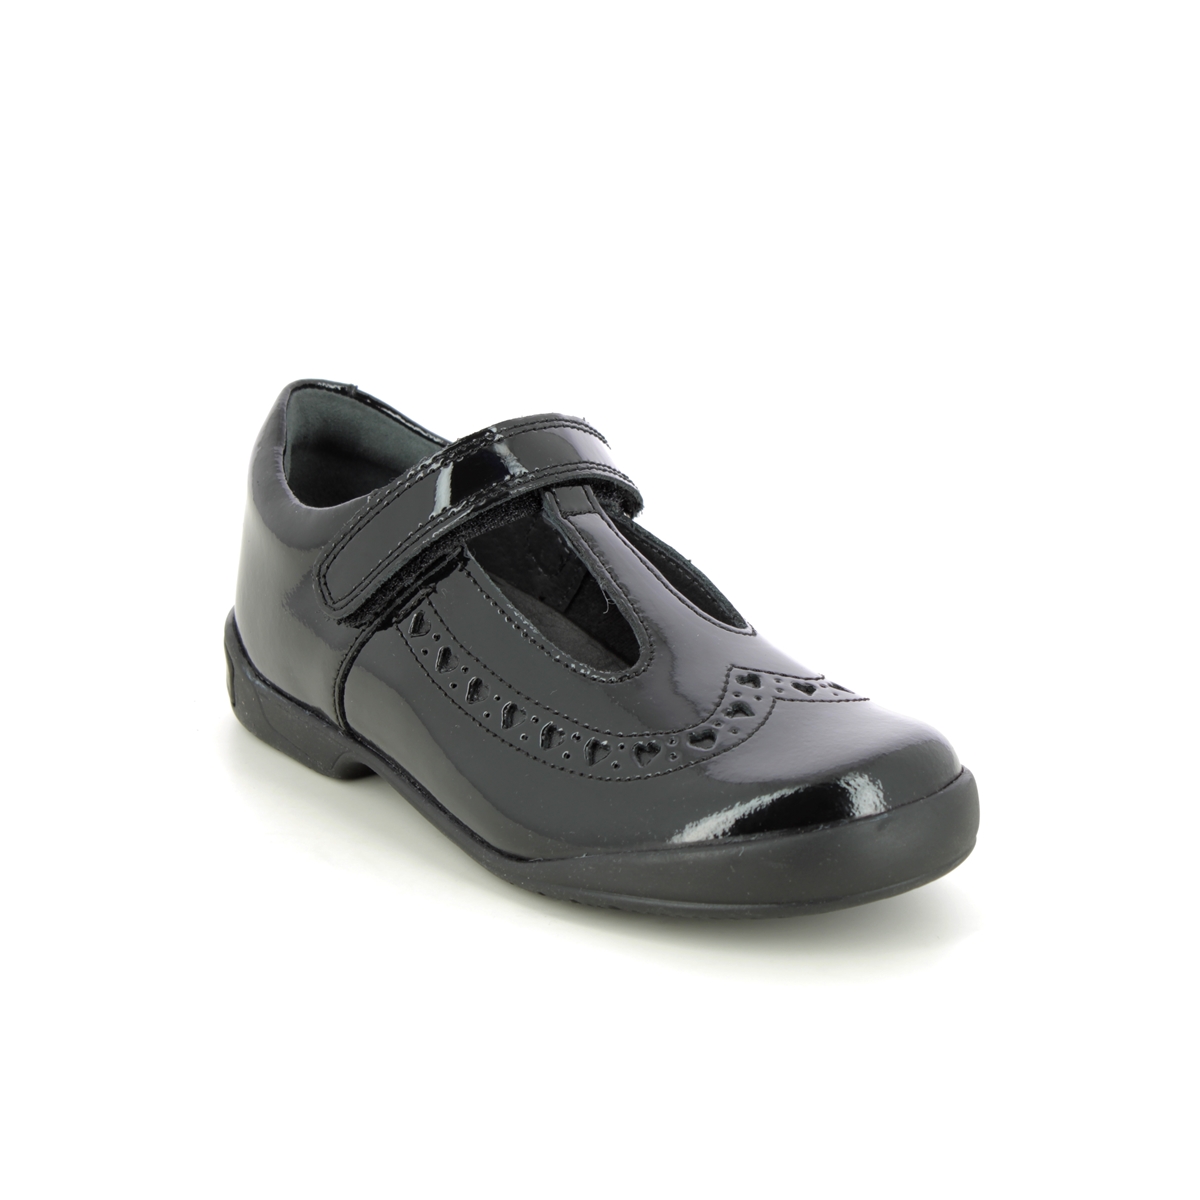 Start Rite - Leapfrog In Black Patent 2789-35E In Size 2 In Plain Black Patent For School Girls Shoes  In Black Patent For kids